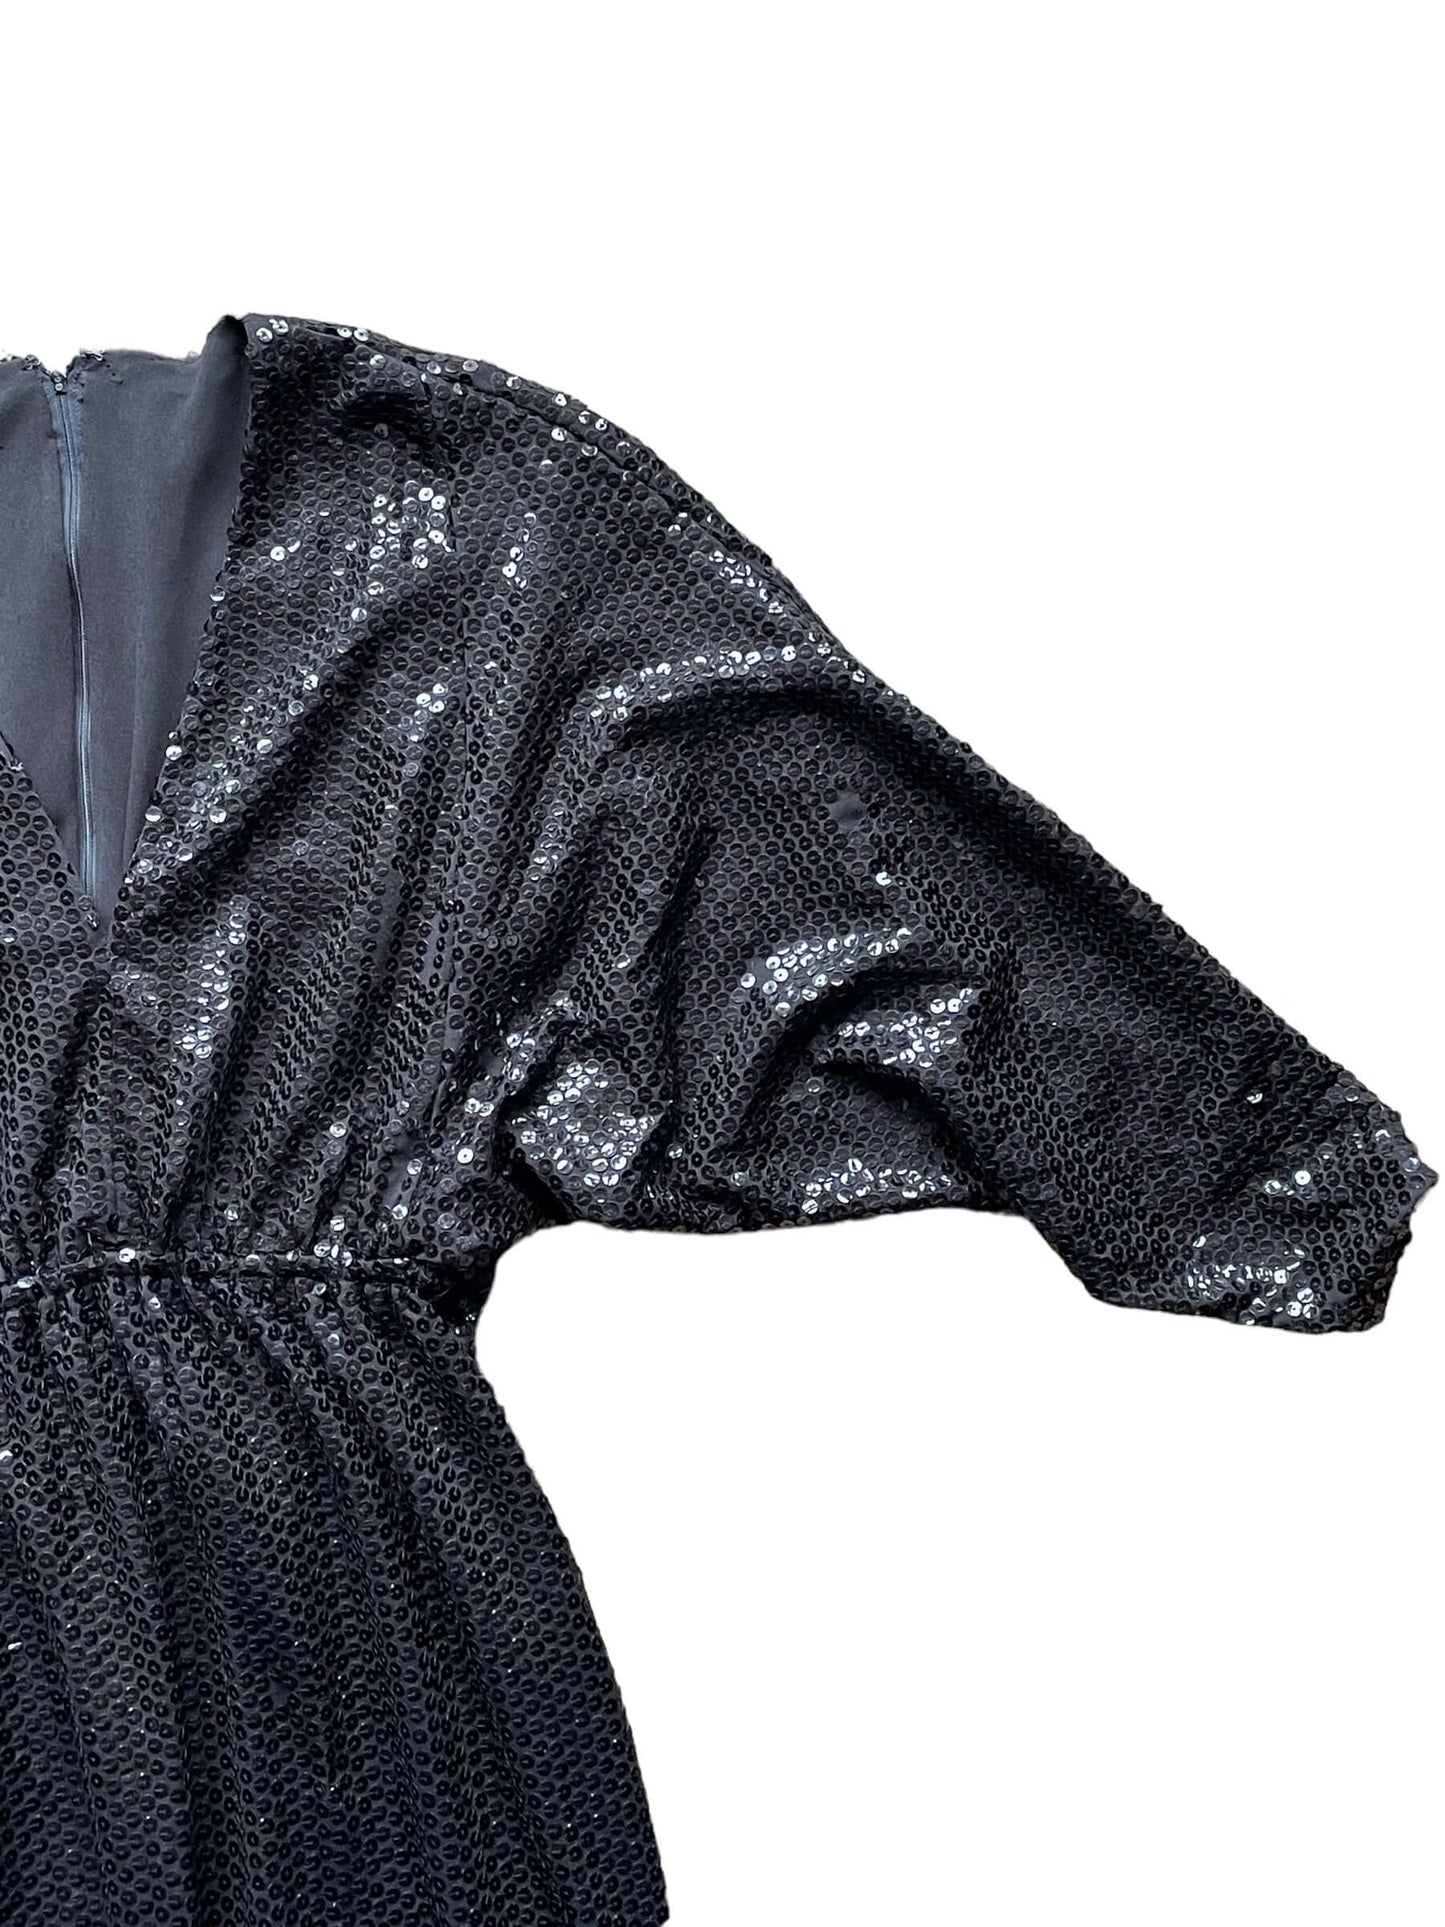 Front left sleeve view of Vintage 1970s Sequin Dress |  Barn Owl Vintage Dresses | Seattle Vintage Ladies Clothing